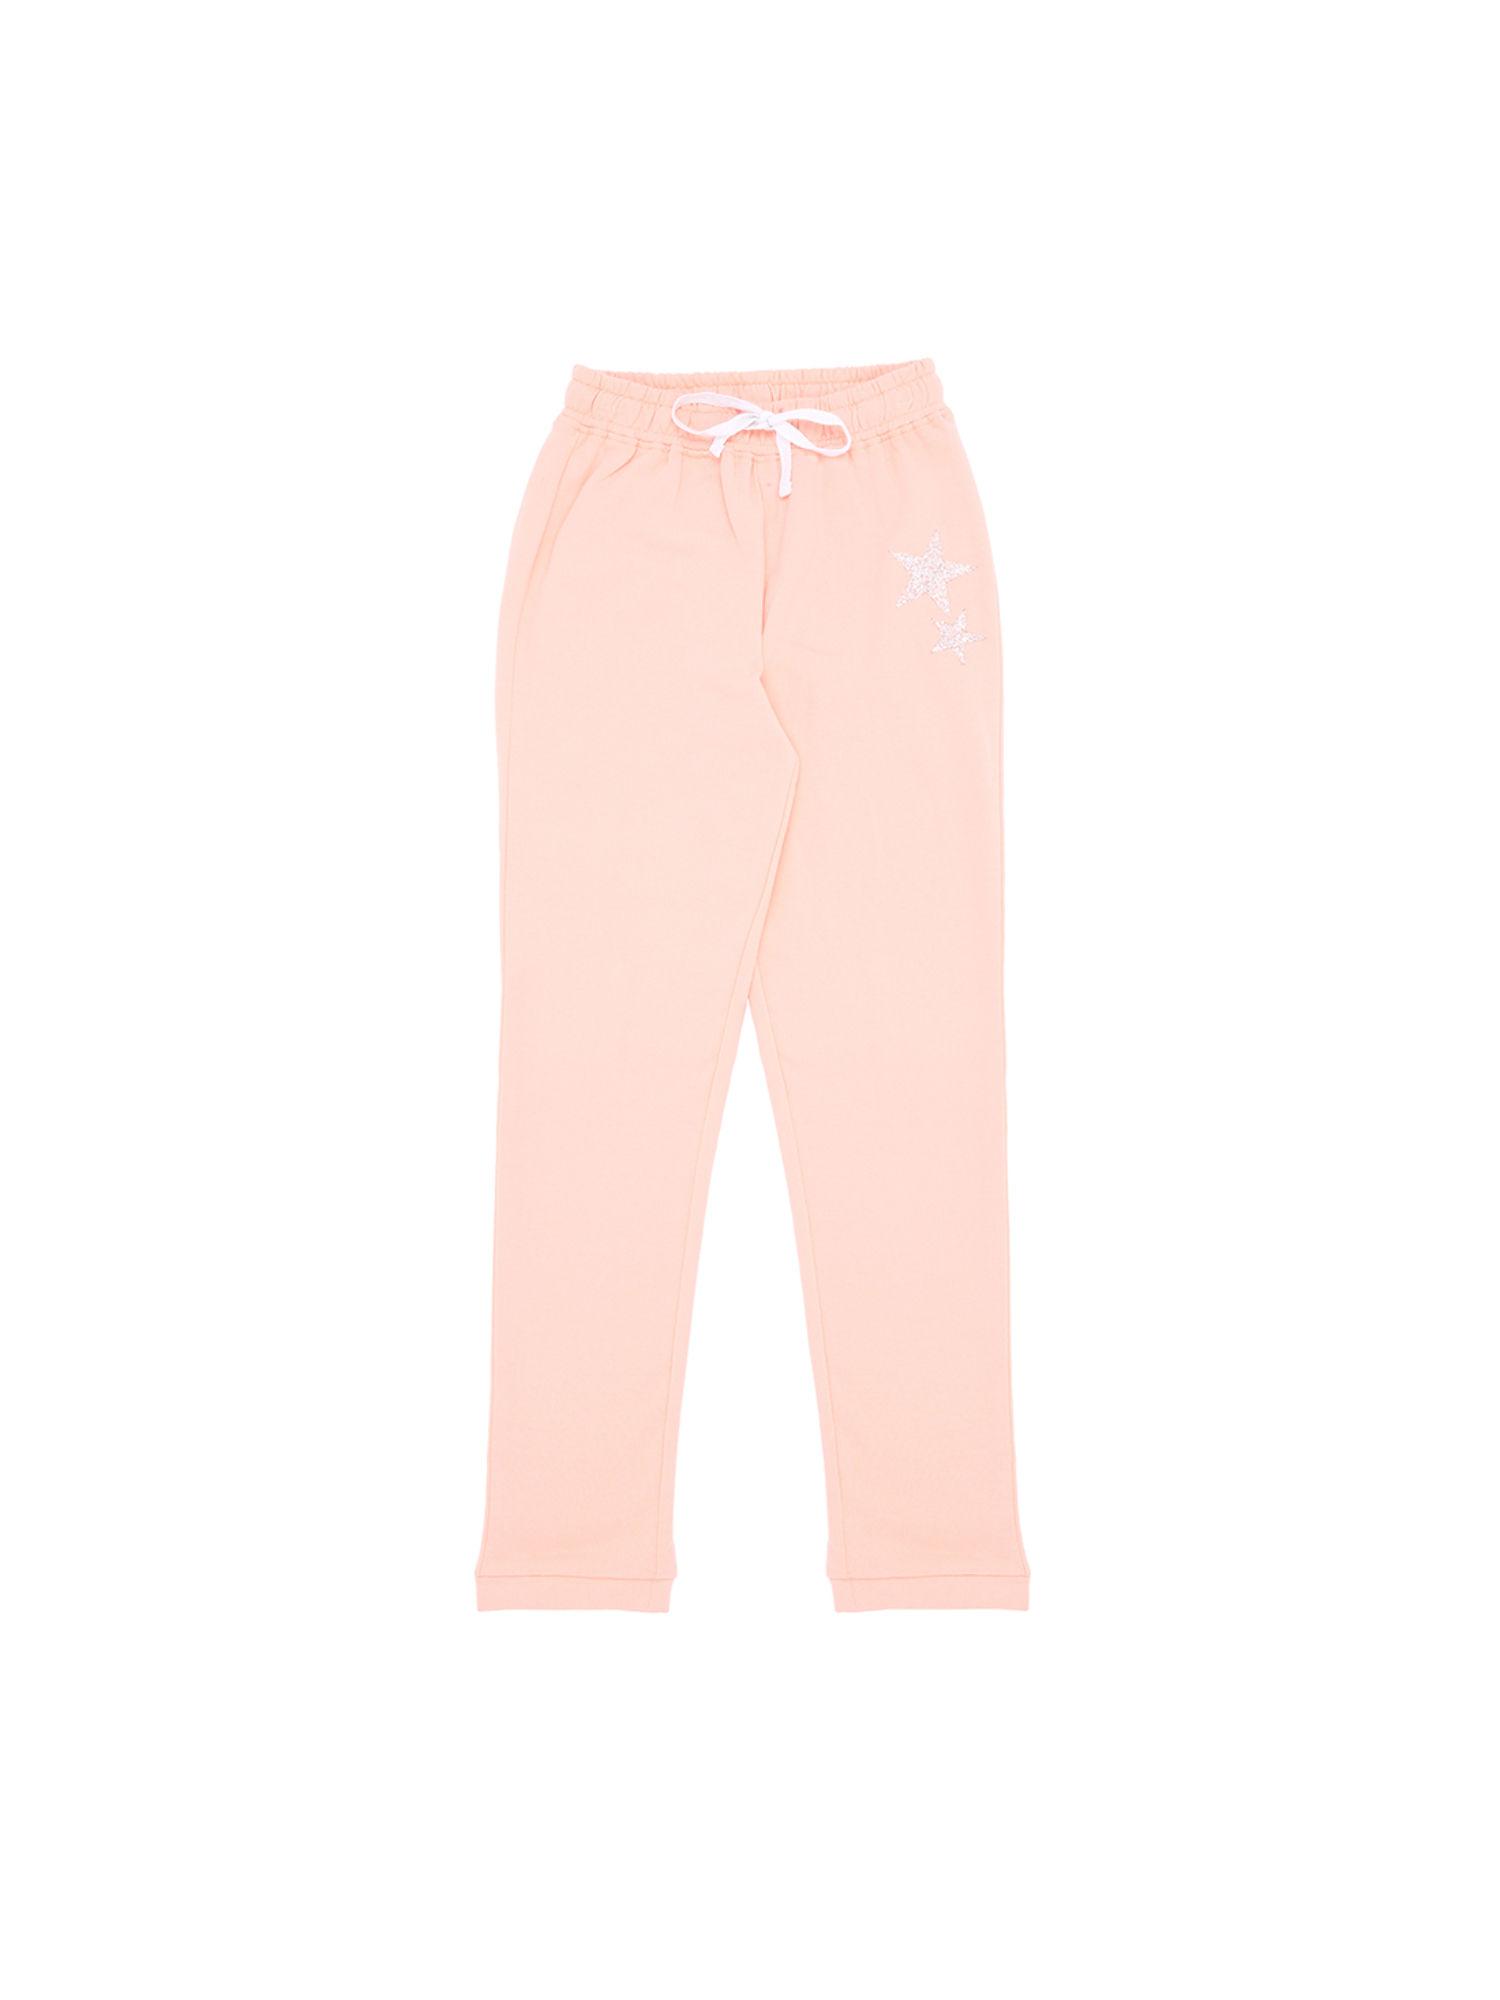 girls-peach-cotton-glitter-print-elasticated-track-pant